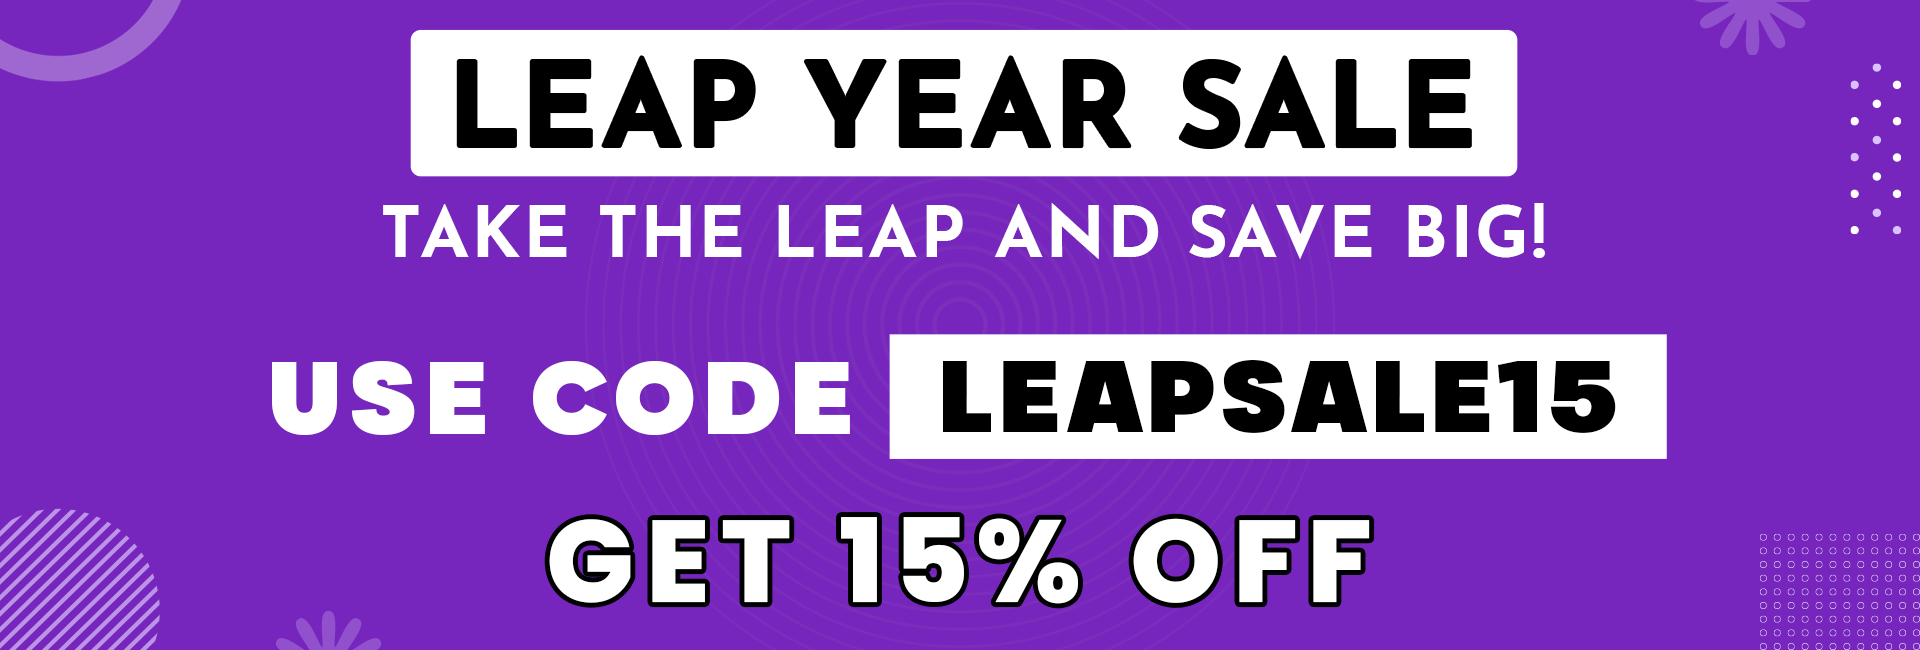 Leap year banner